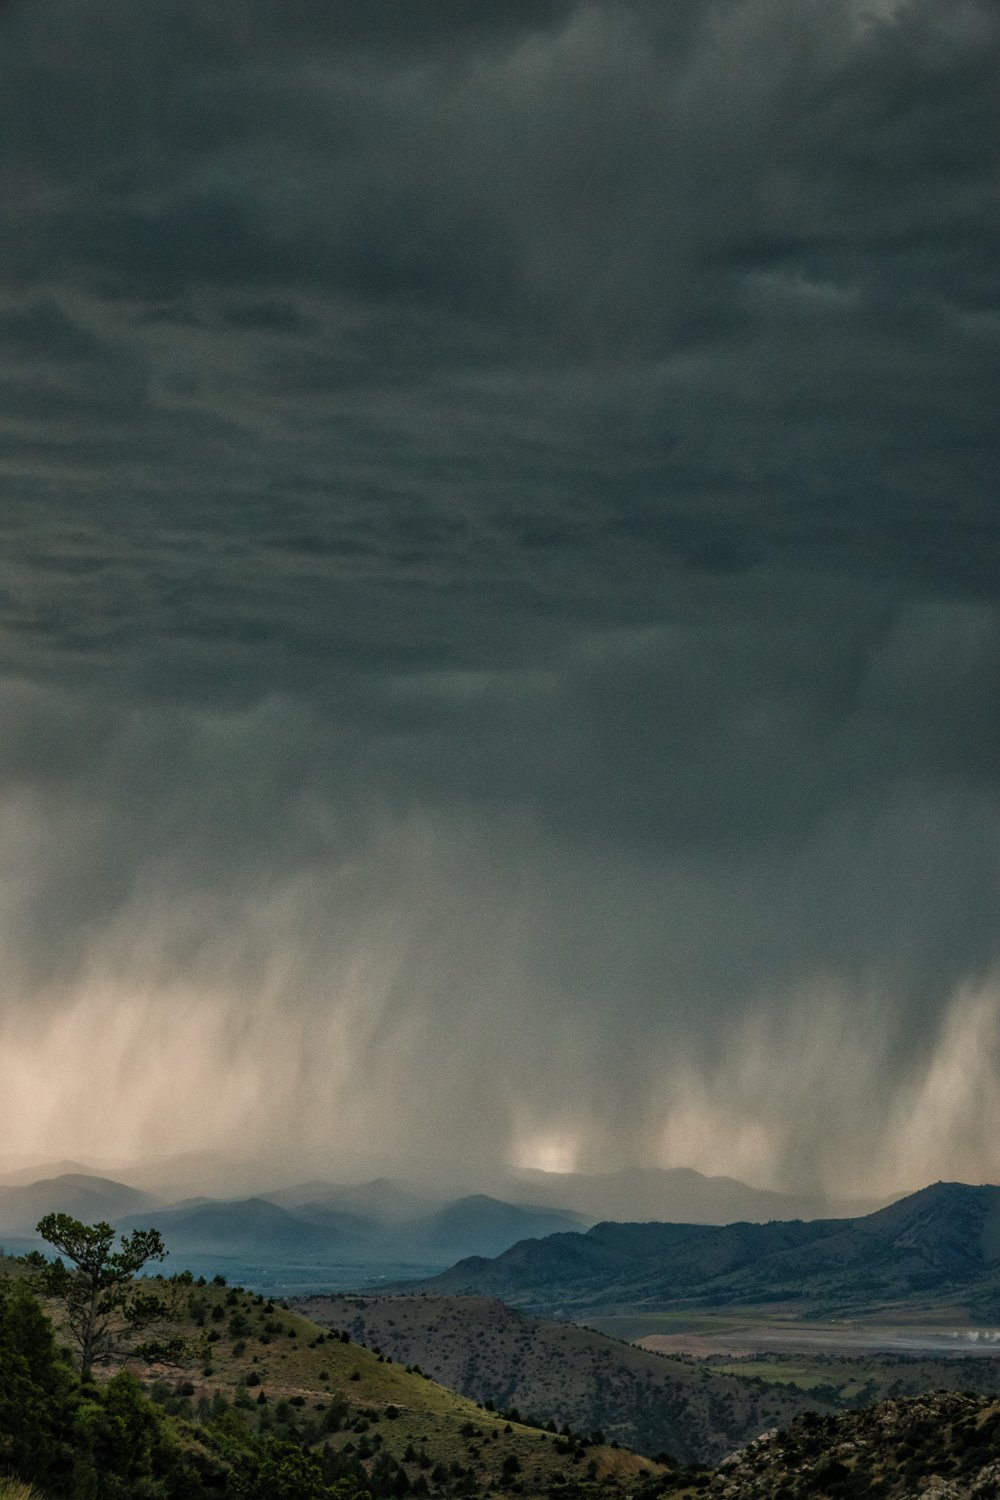 Rainstorm over Idaho